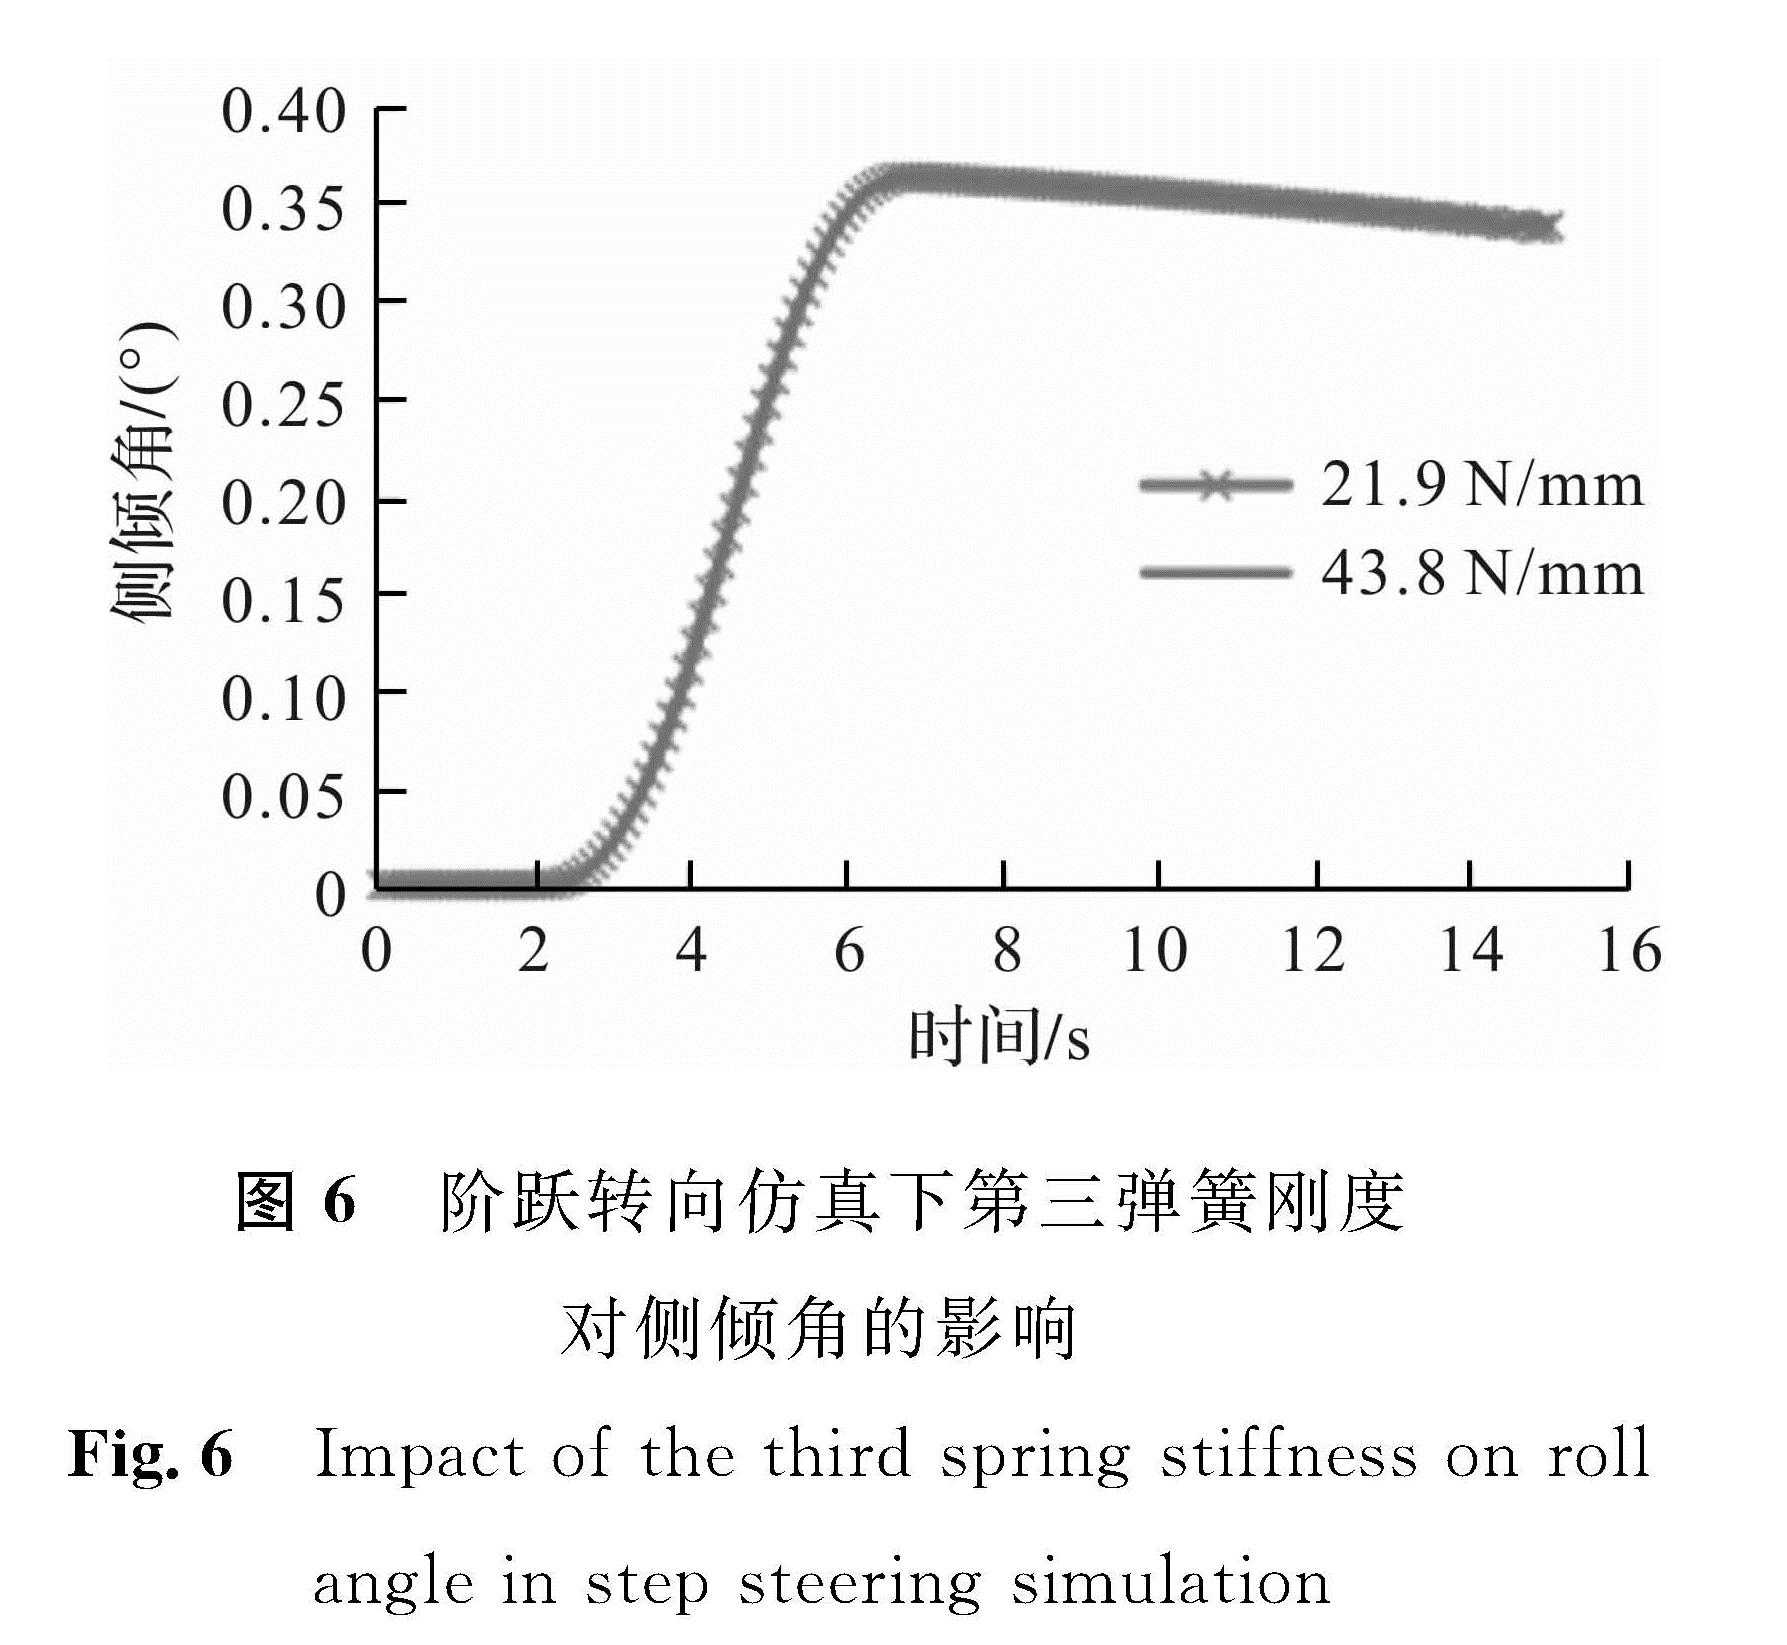 图6 阶跃转向仿真下第三弹簧刚度对侧倾角的影响<br/>Fig.6 Impact of the third spring stiffness on roll angle in step steering simulation